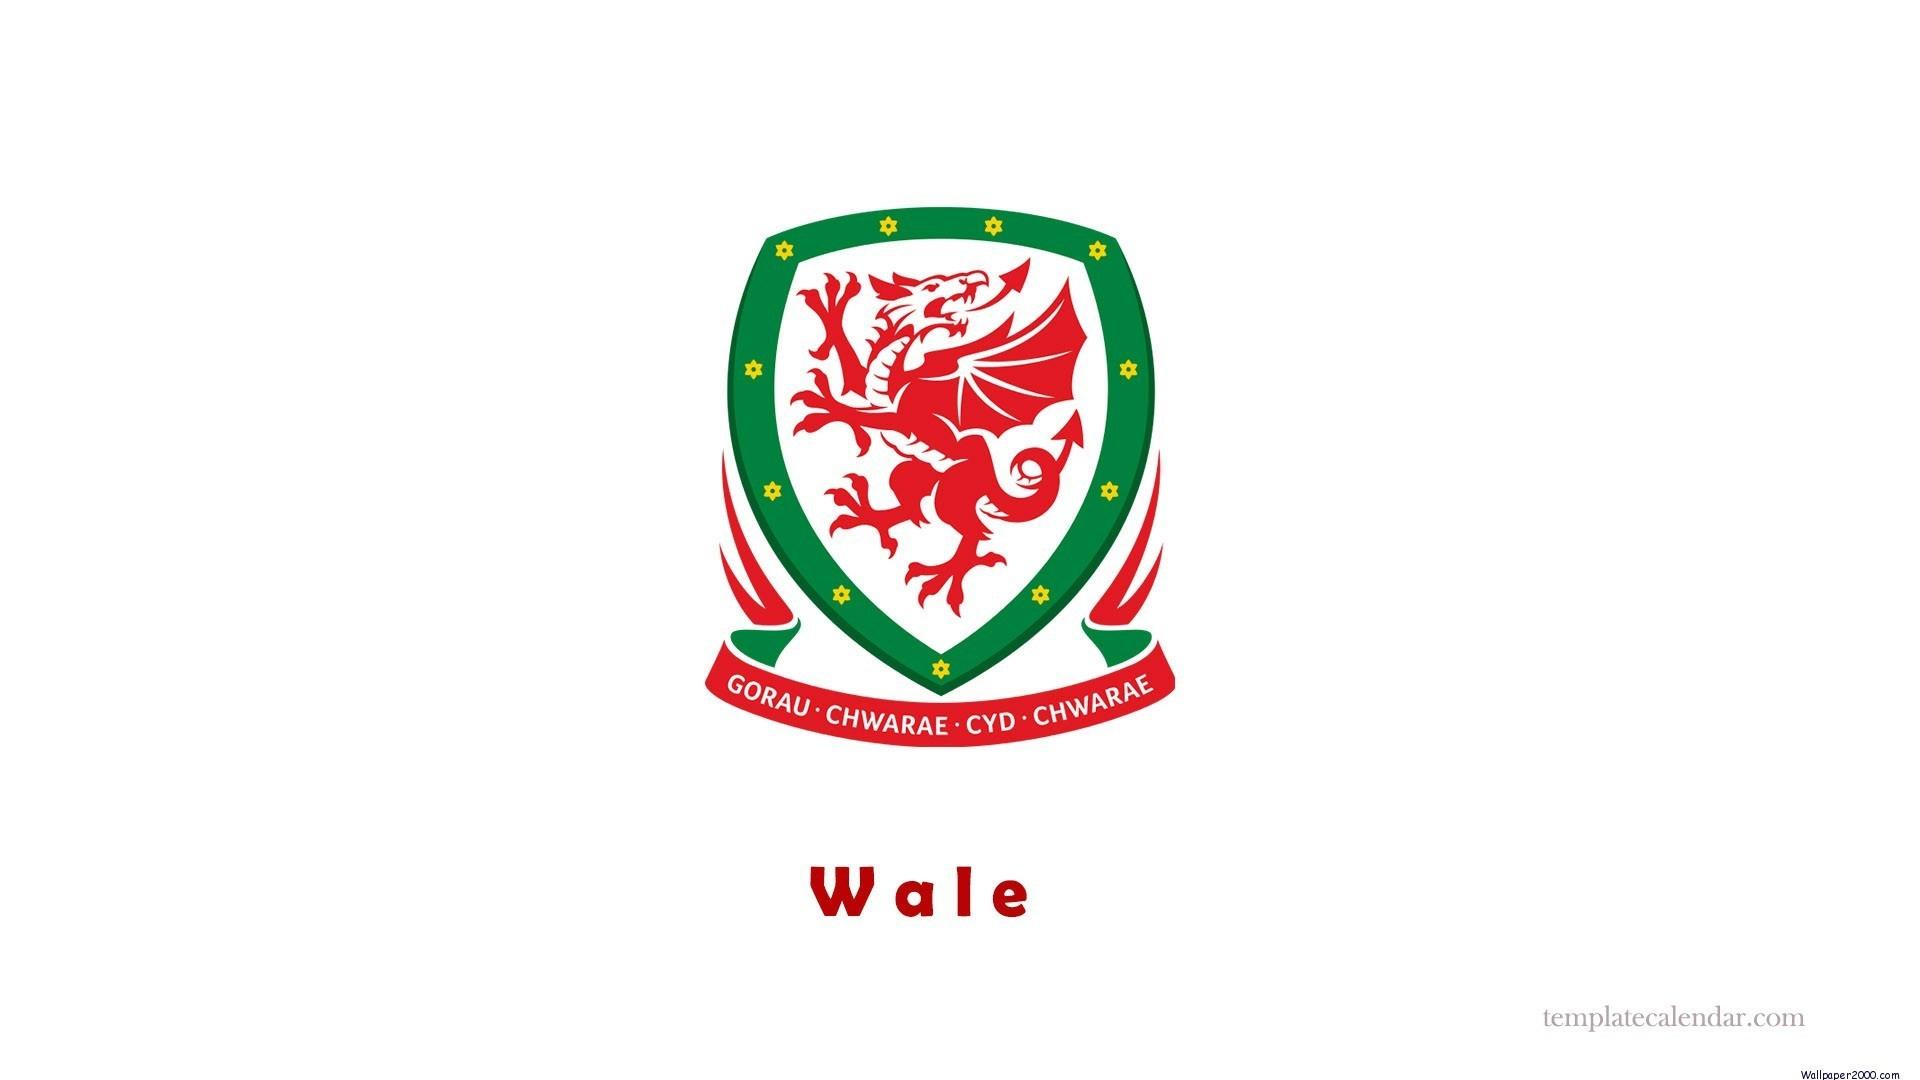 UEFA Euro 2016 Wales wallpaper